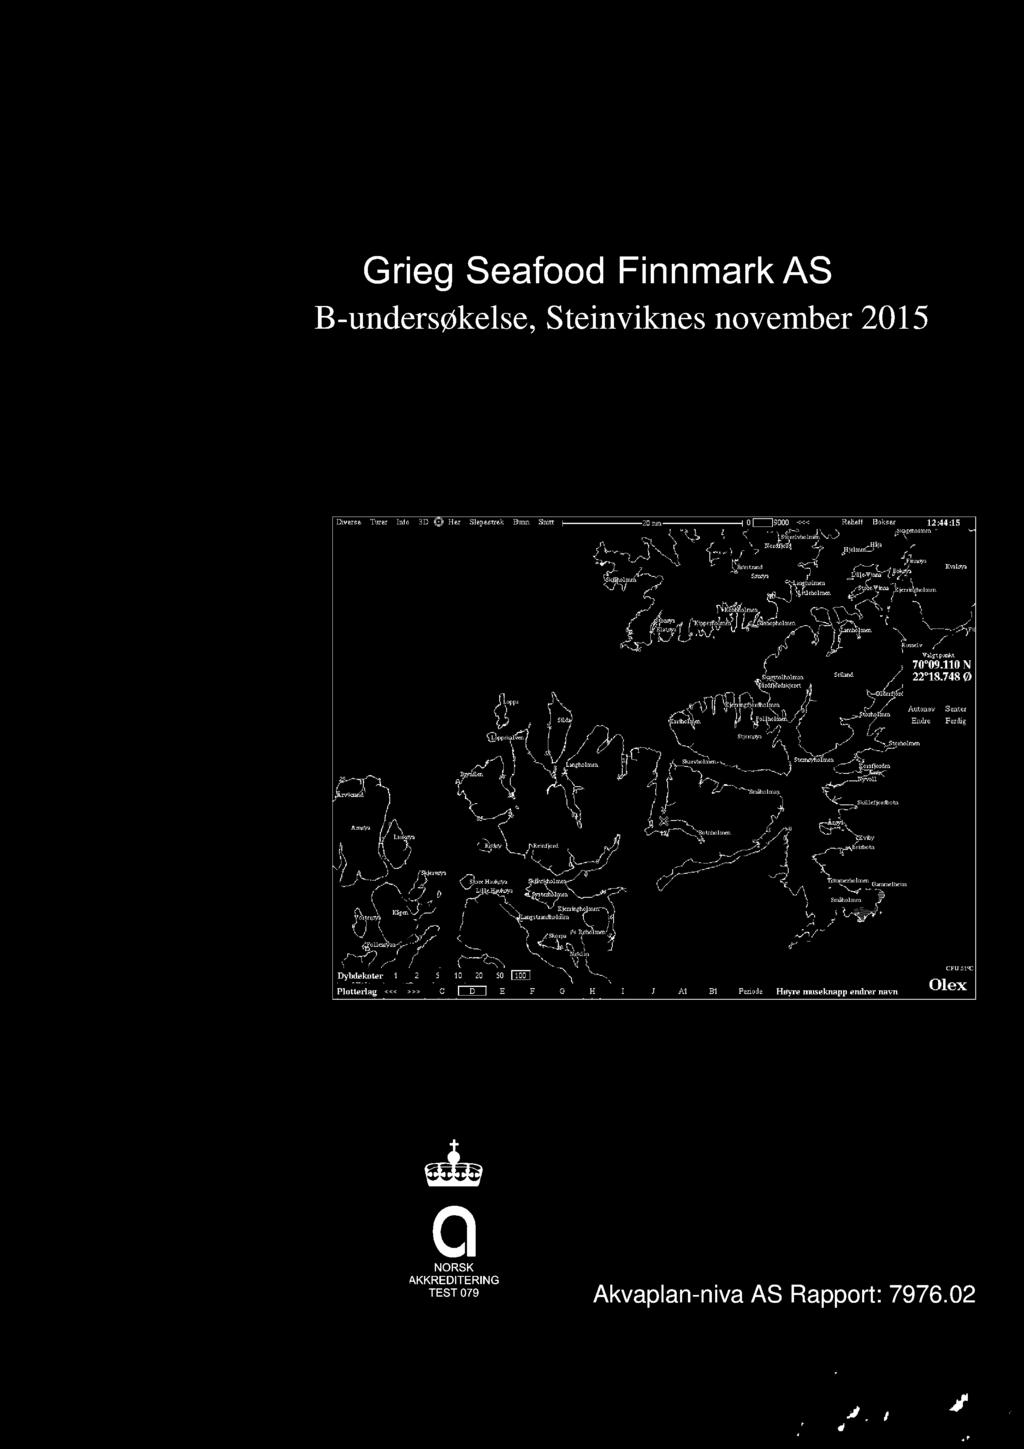 Grieg Seafood Finnmark AS